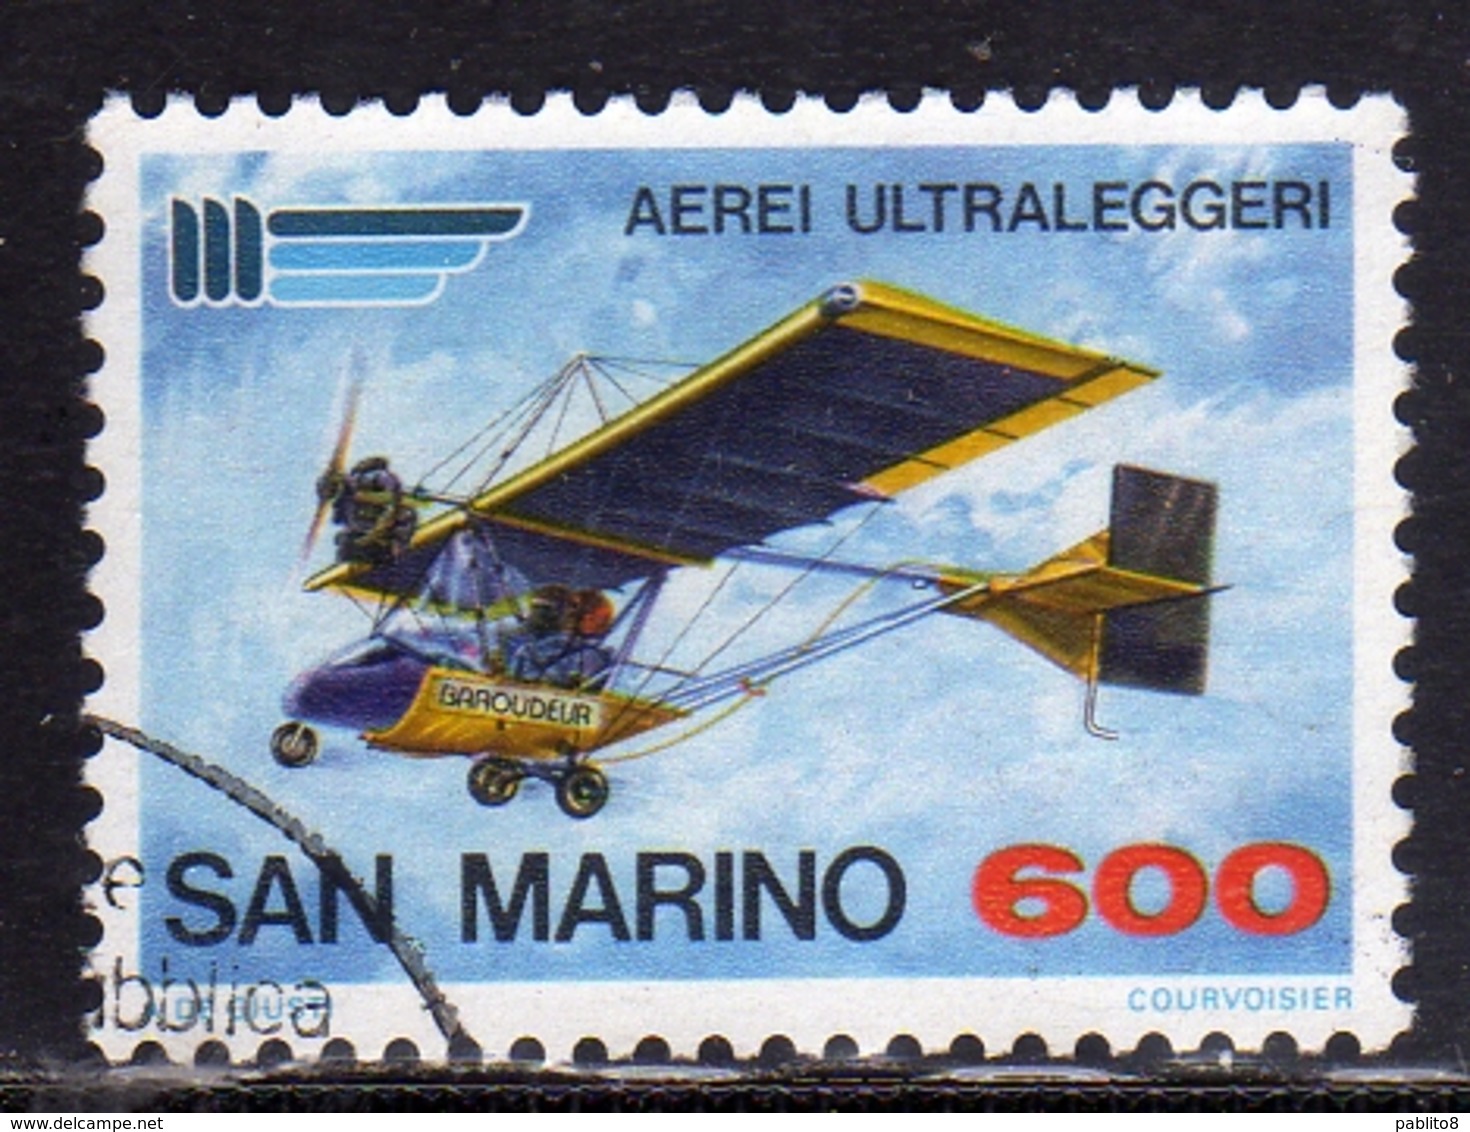 REPUBBLICA DI SAN MARINO 1987 AEREI ULTRALEGGERI ULTRA-LIGHT AIRCRAFT AÉRONEF ULTRA-LÉGER LIRE 600 USATO USED OBLITERE' - Used Stamps